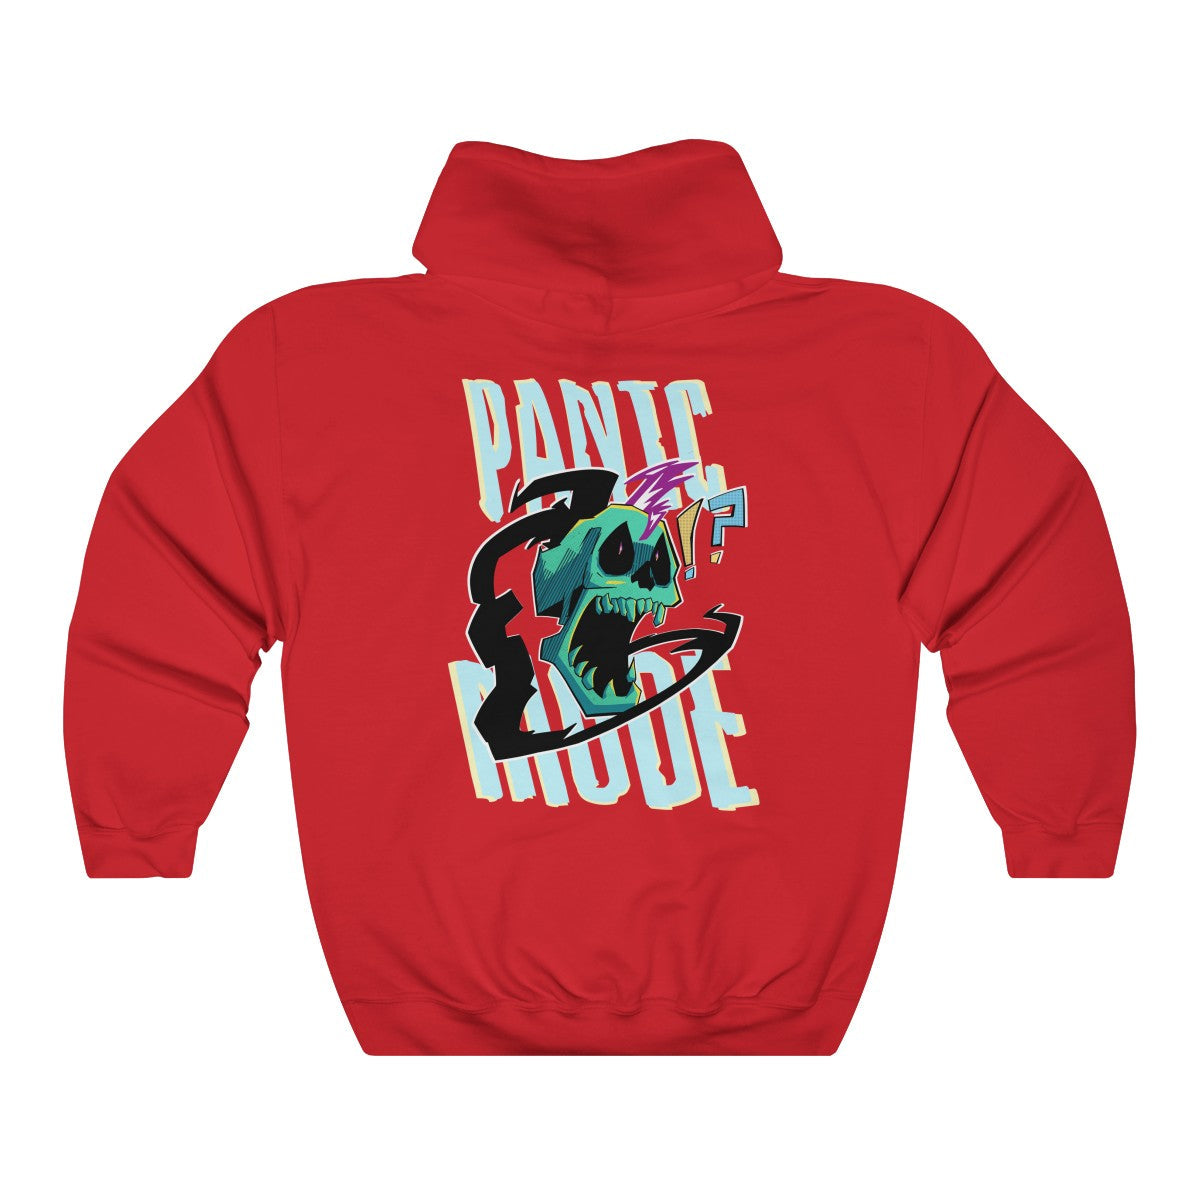 Panic Mode! - Hoodie Hoodie AFLT-DaveyDboi Red S 